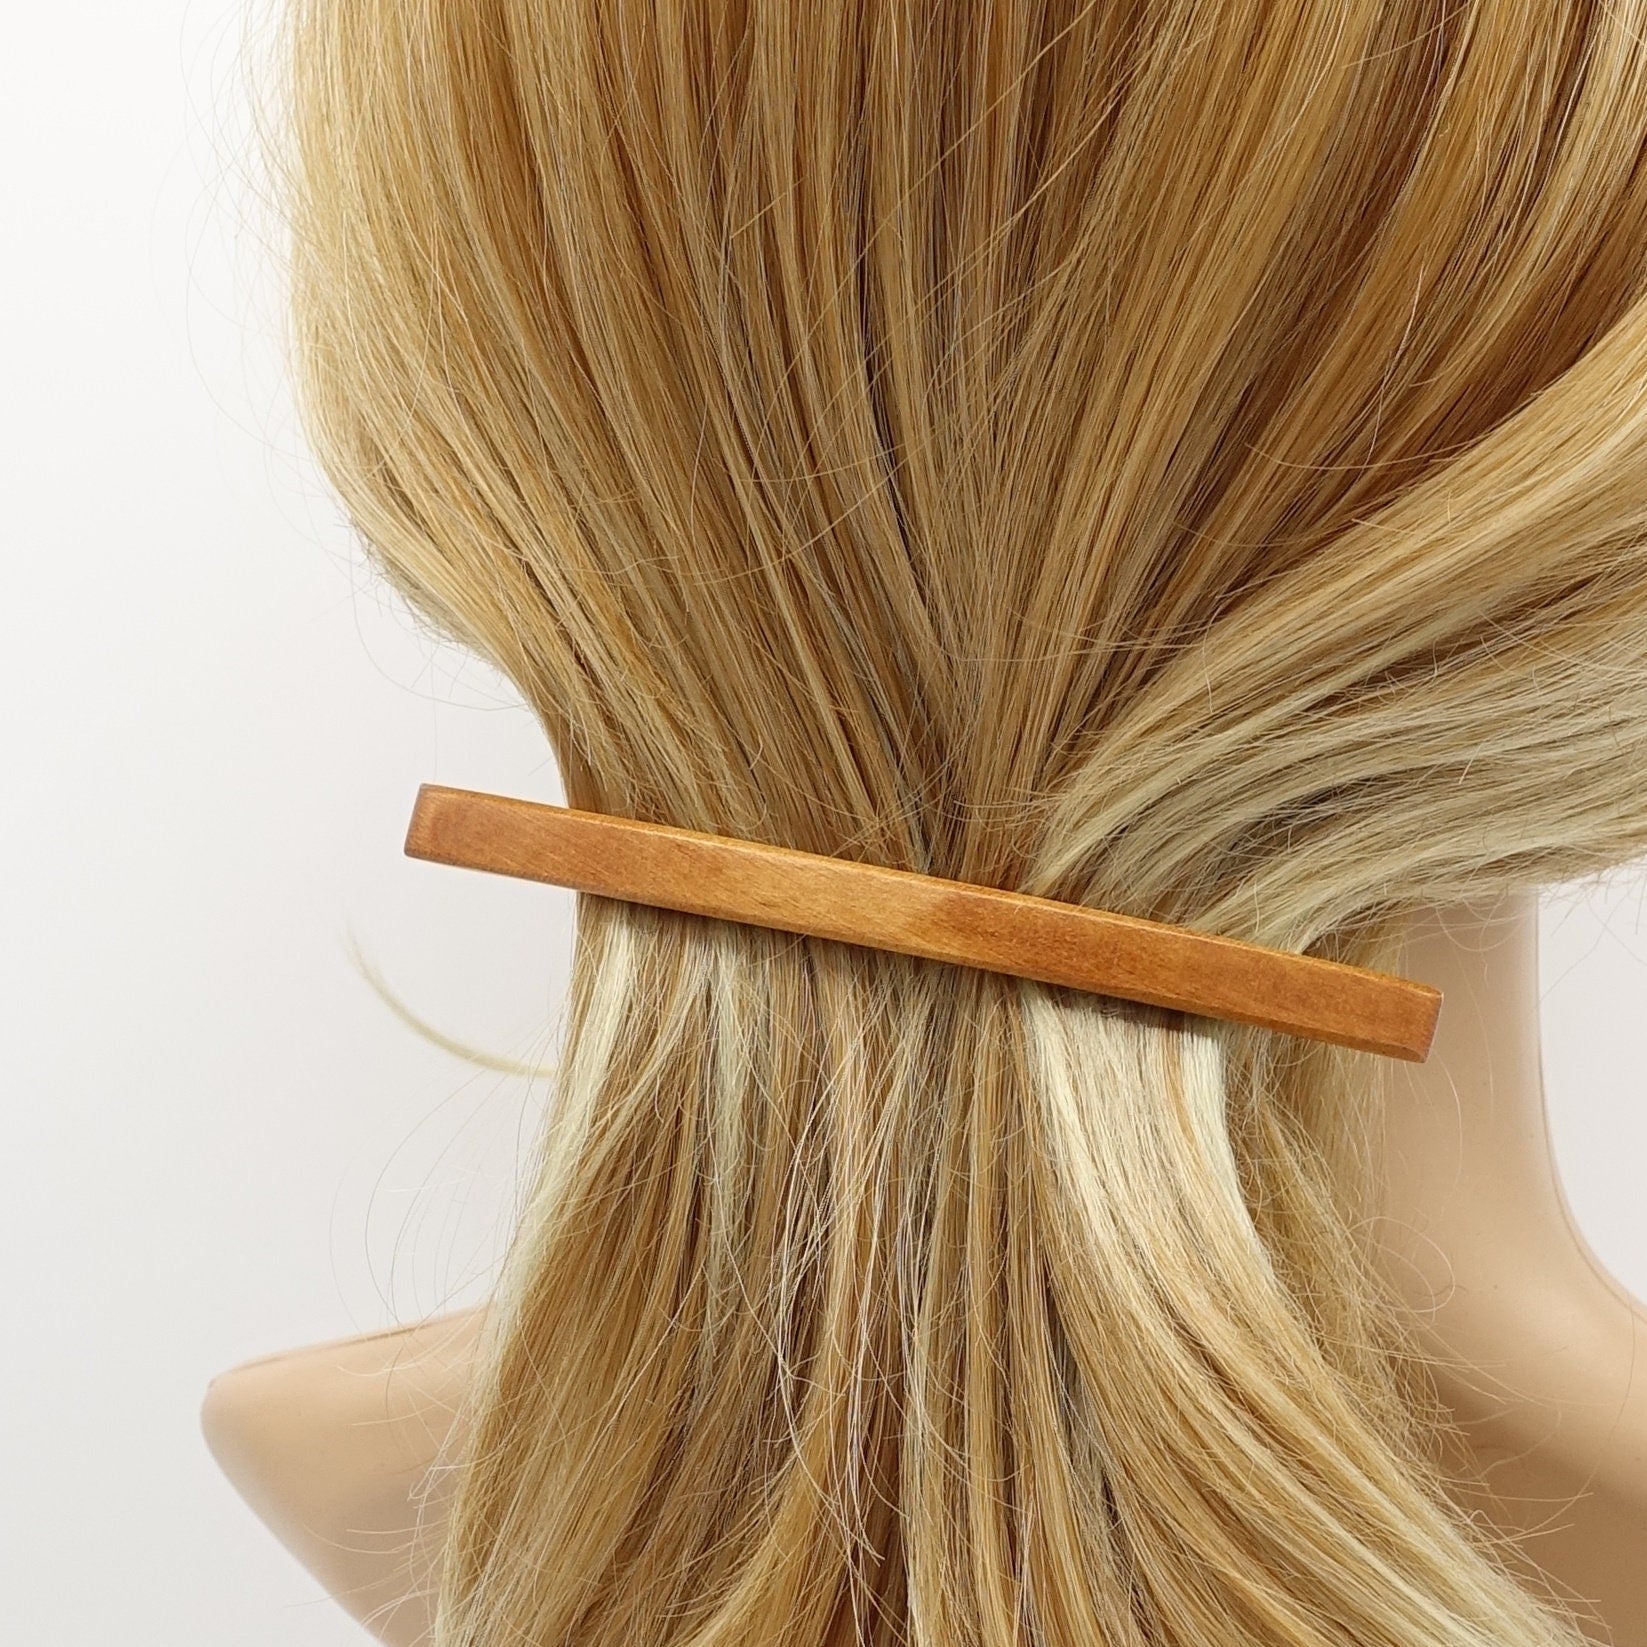 veryshine.com Camel wood hair barrette thin hair accessory for women